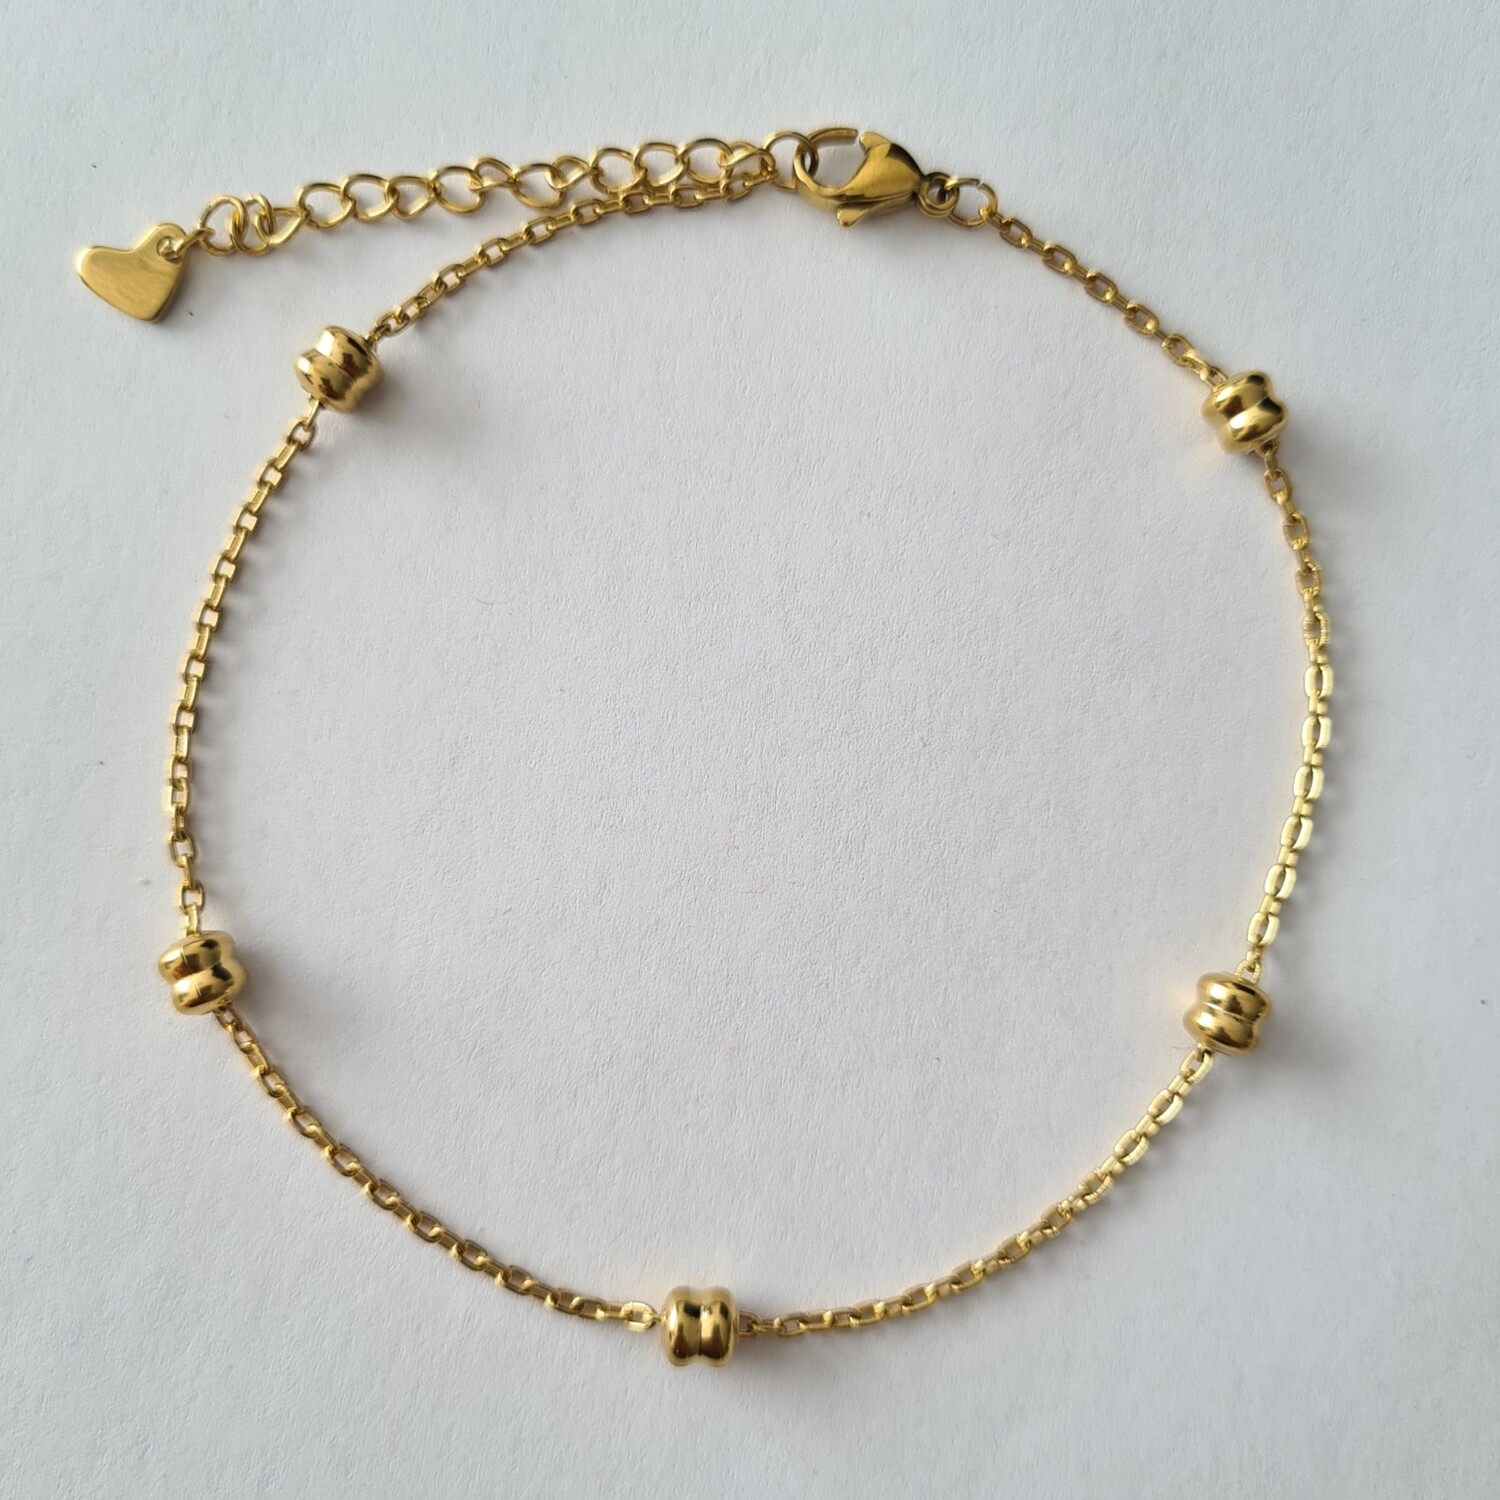 Double beads enkelbandje goud/stainless steel